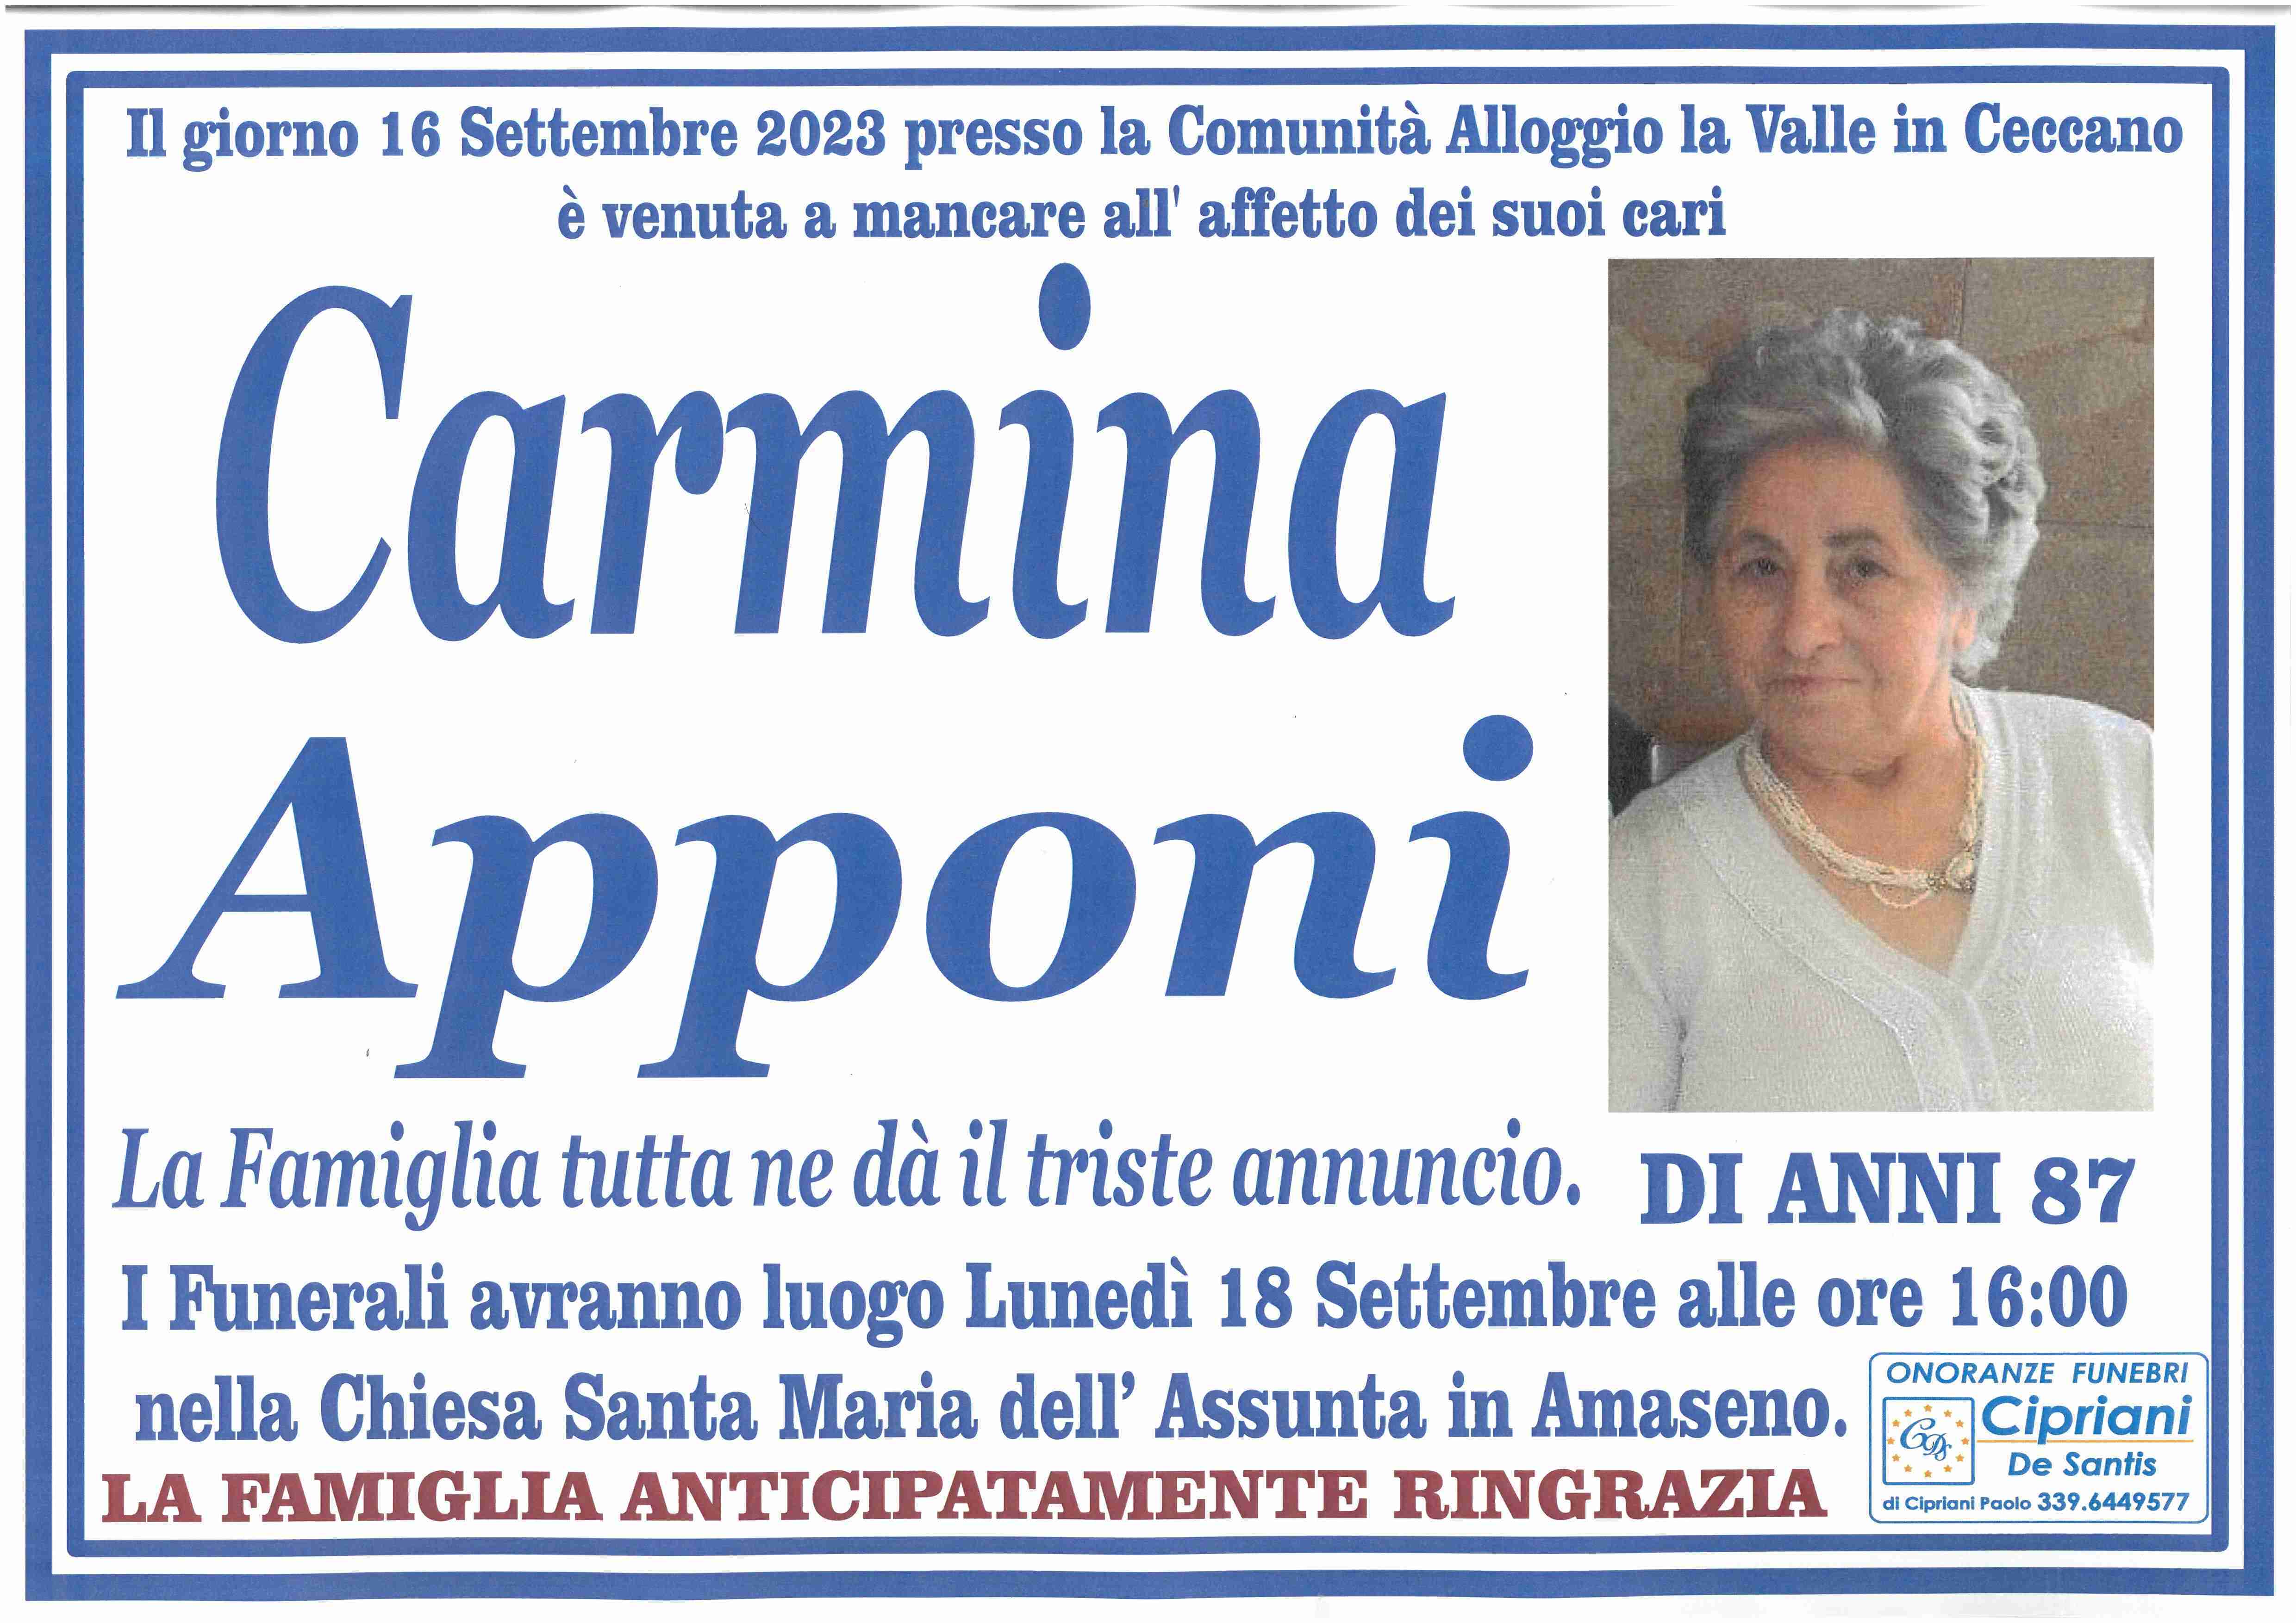 Carmina Apponi